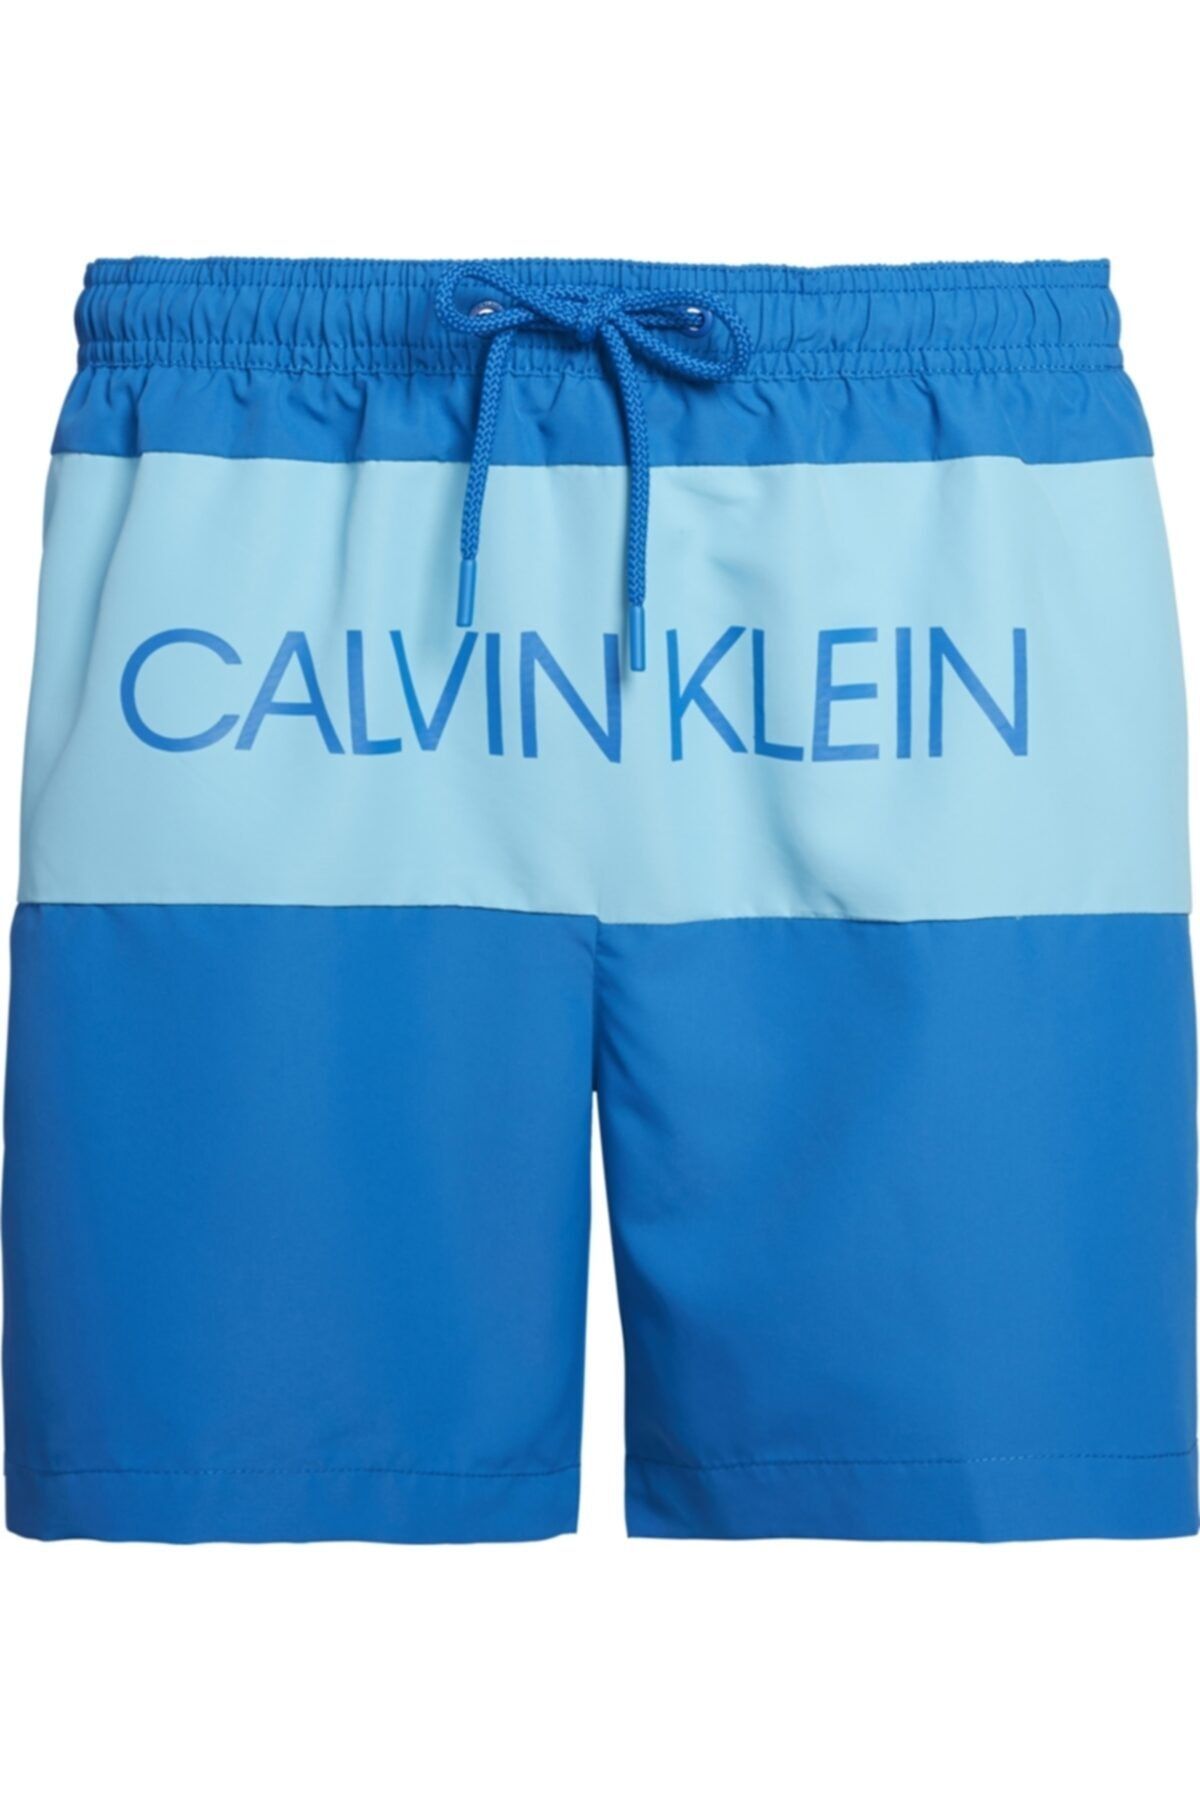 Calvin Klein Medium Drawstring Imperial Blue